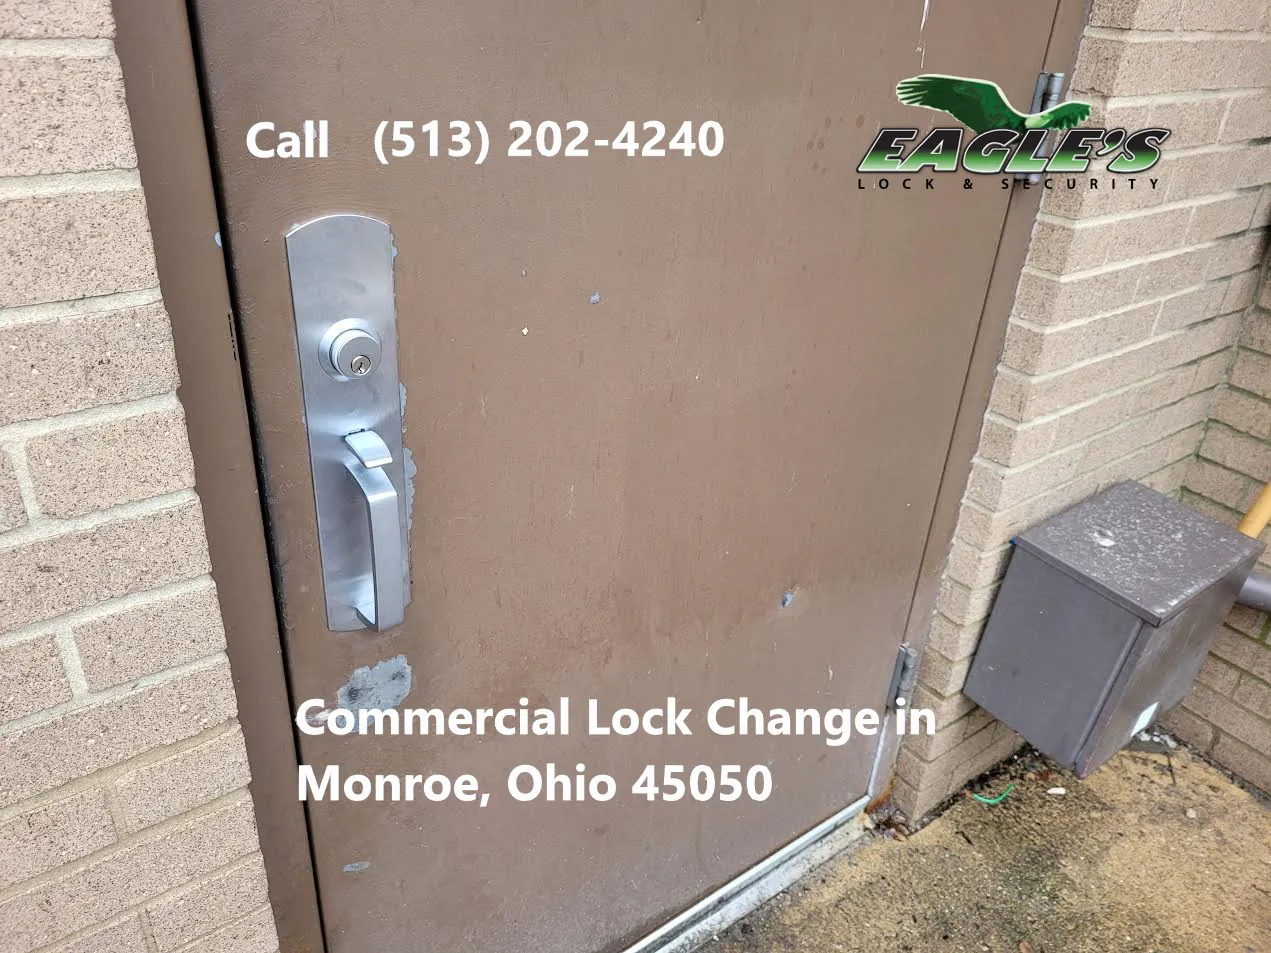 Commercial Lock Change in Monroe Ohio 45050